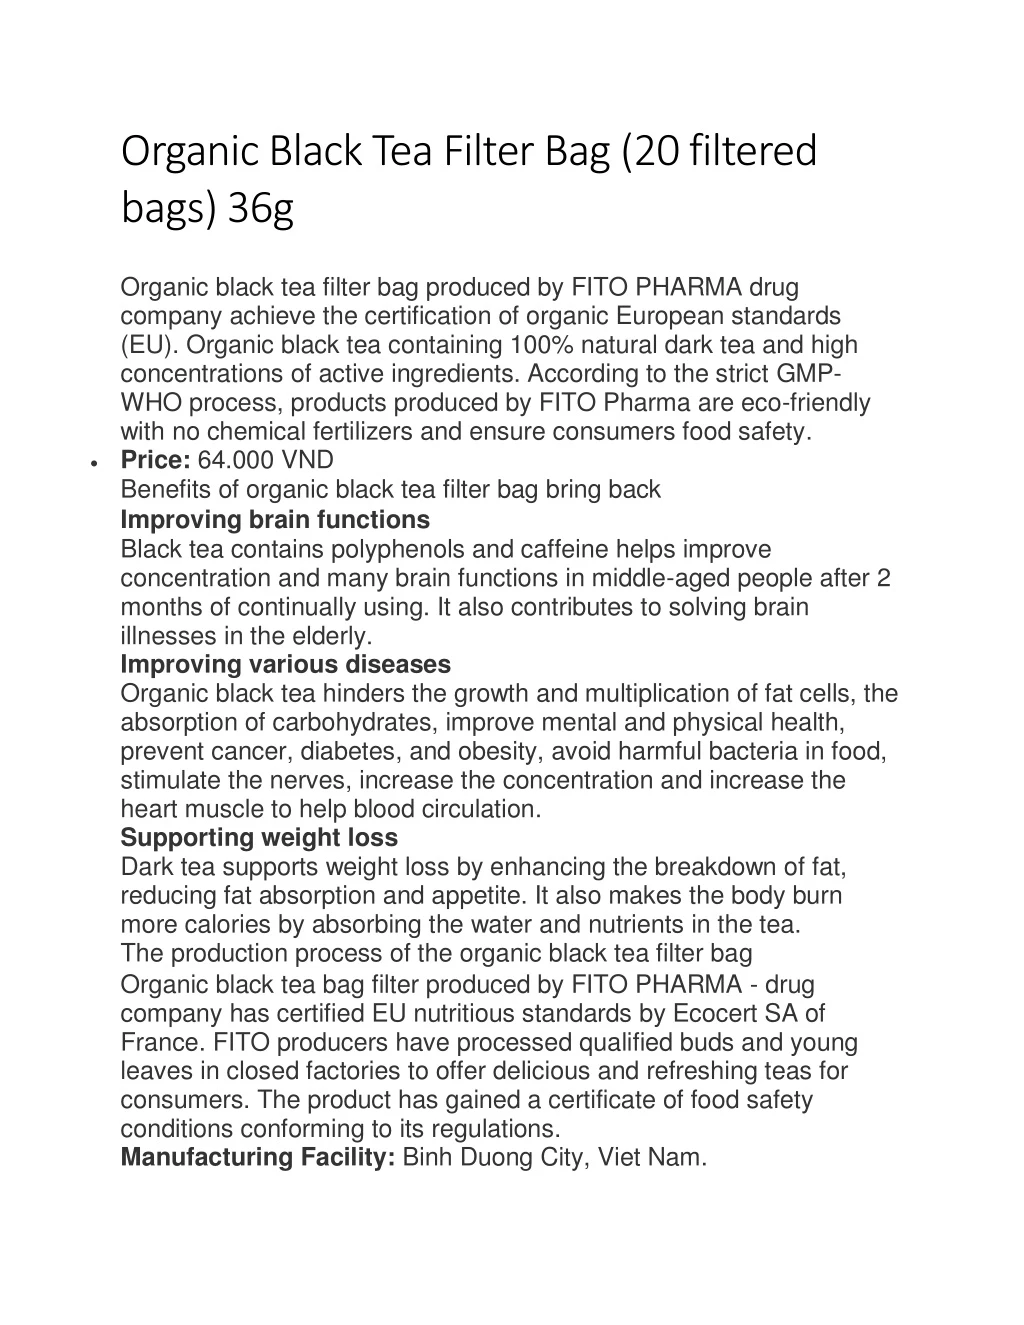 organic black tea filter bag 20 filtered bags 36g